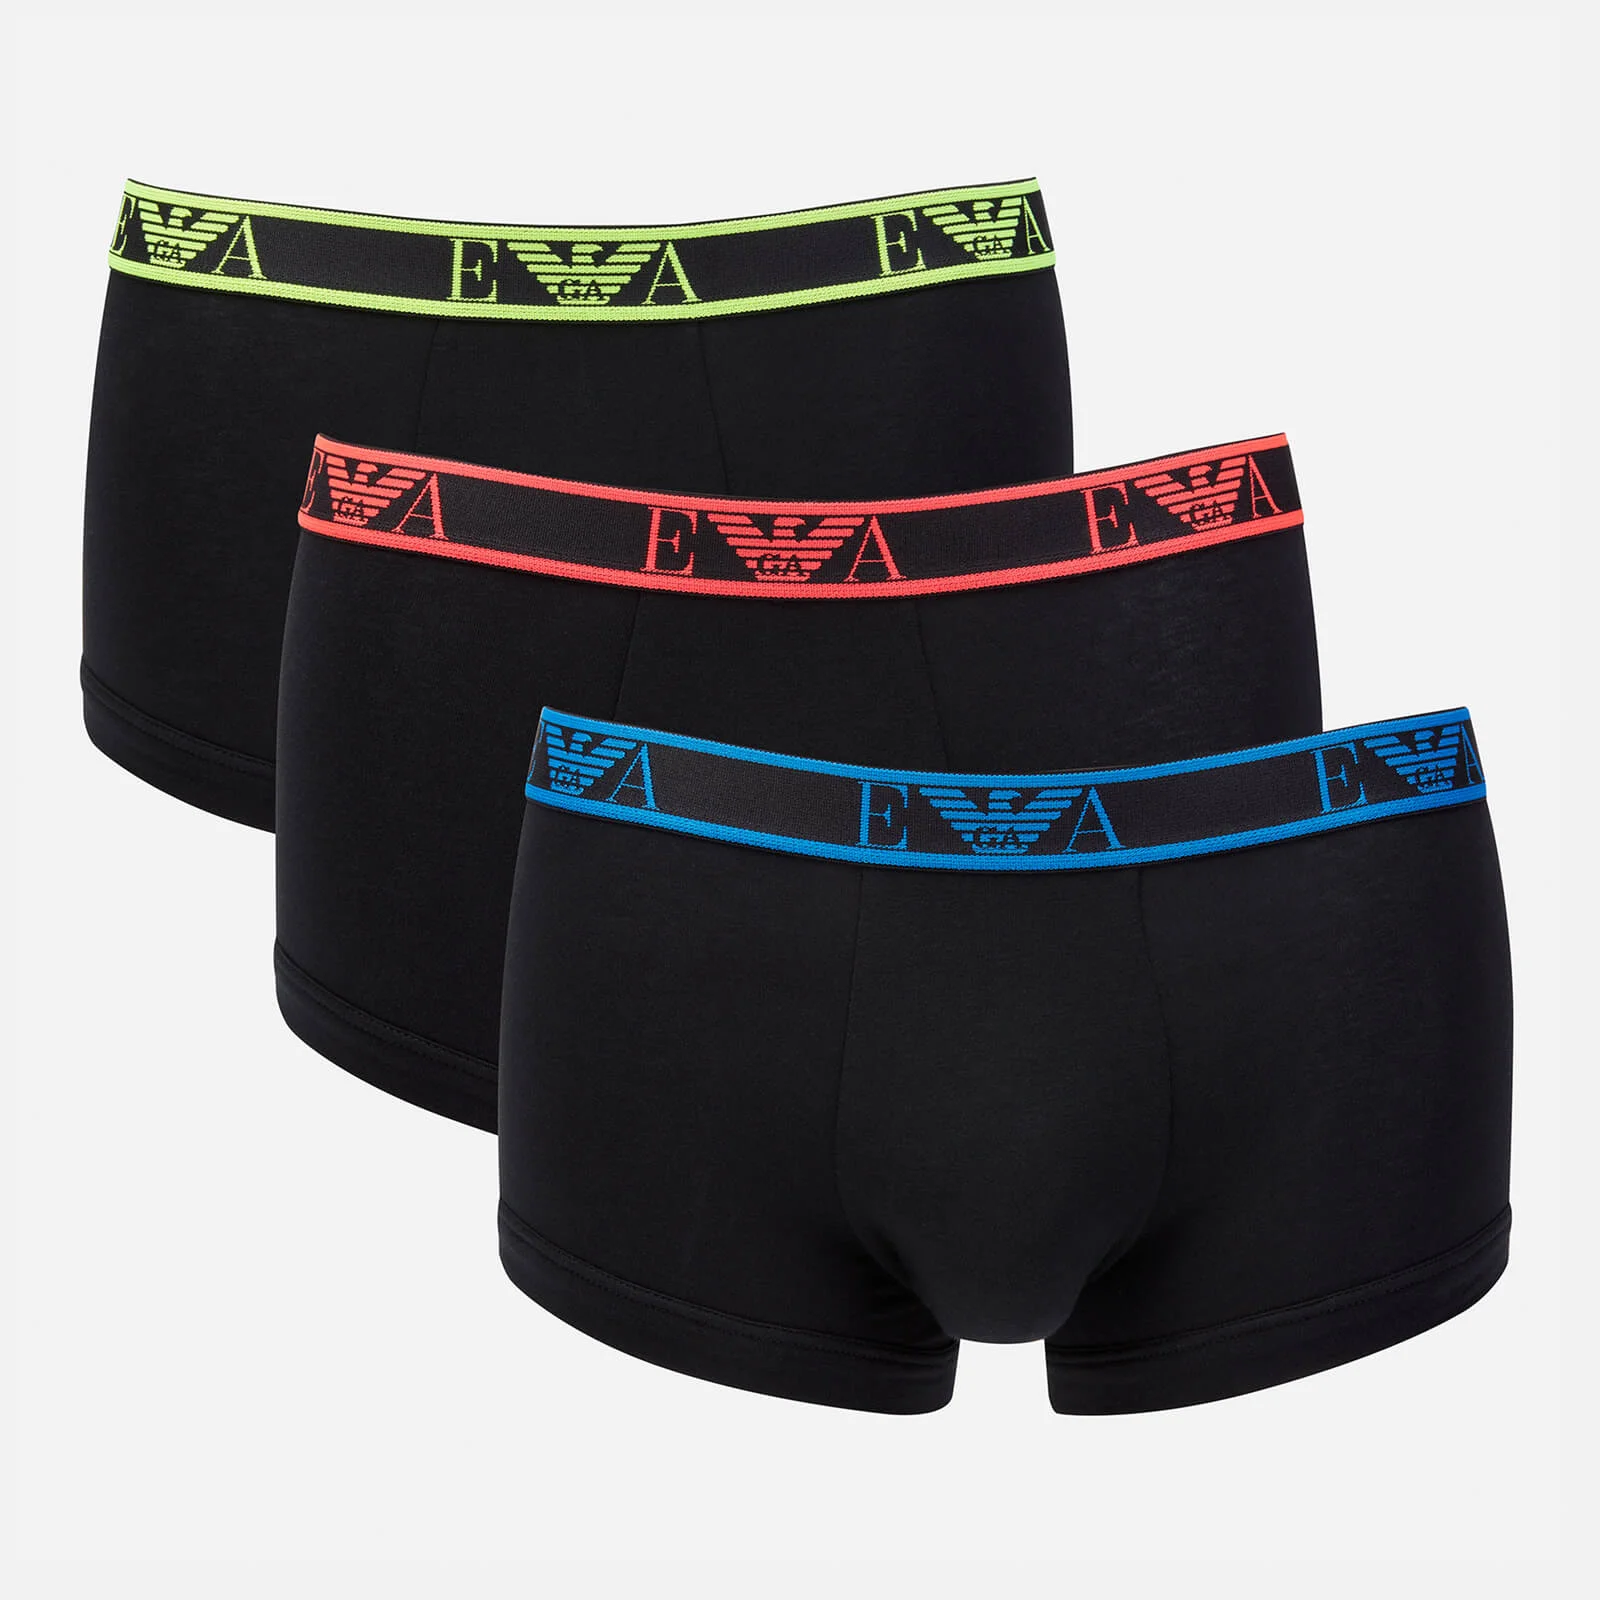 Emporio Armani Men's 3 Pack Boxer Shorts - Nero Image 1